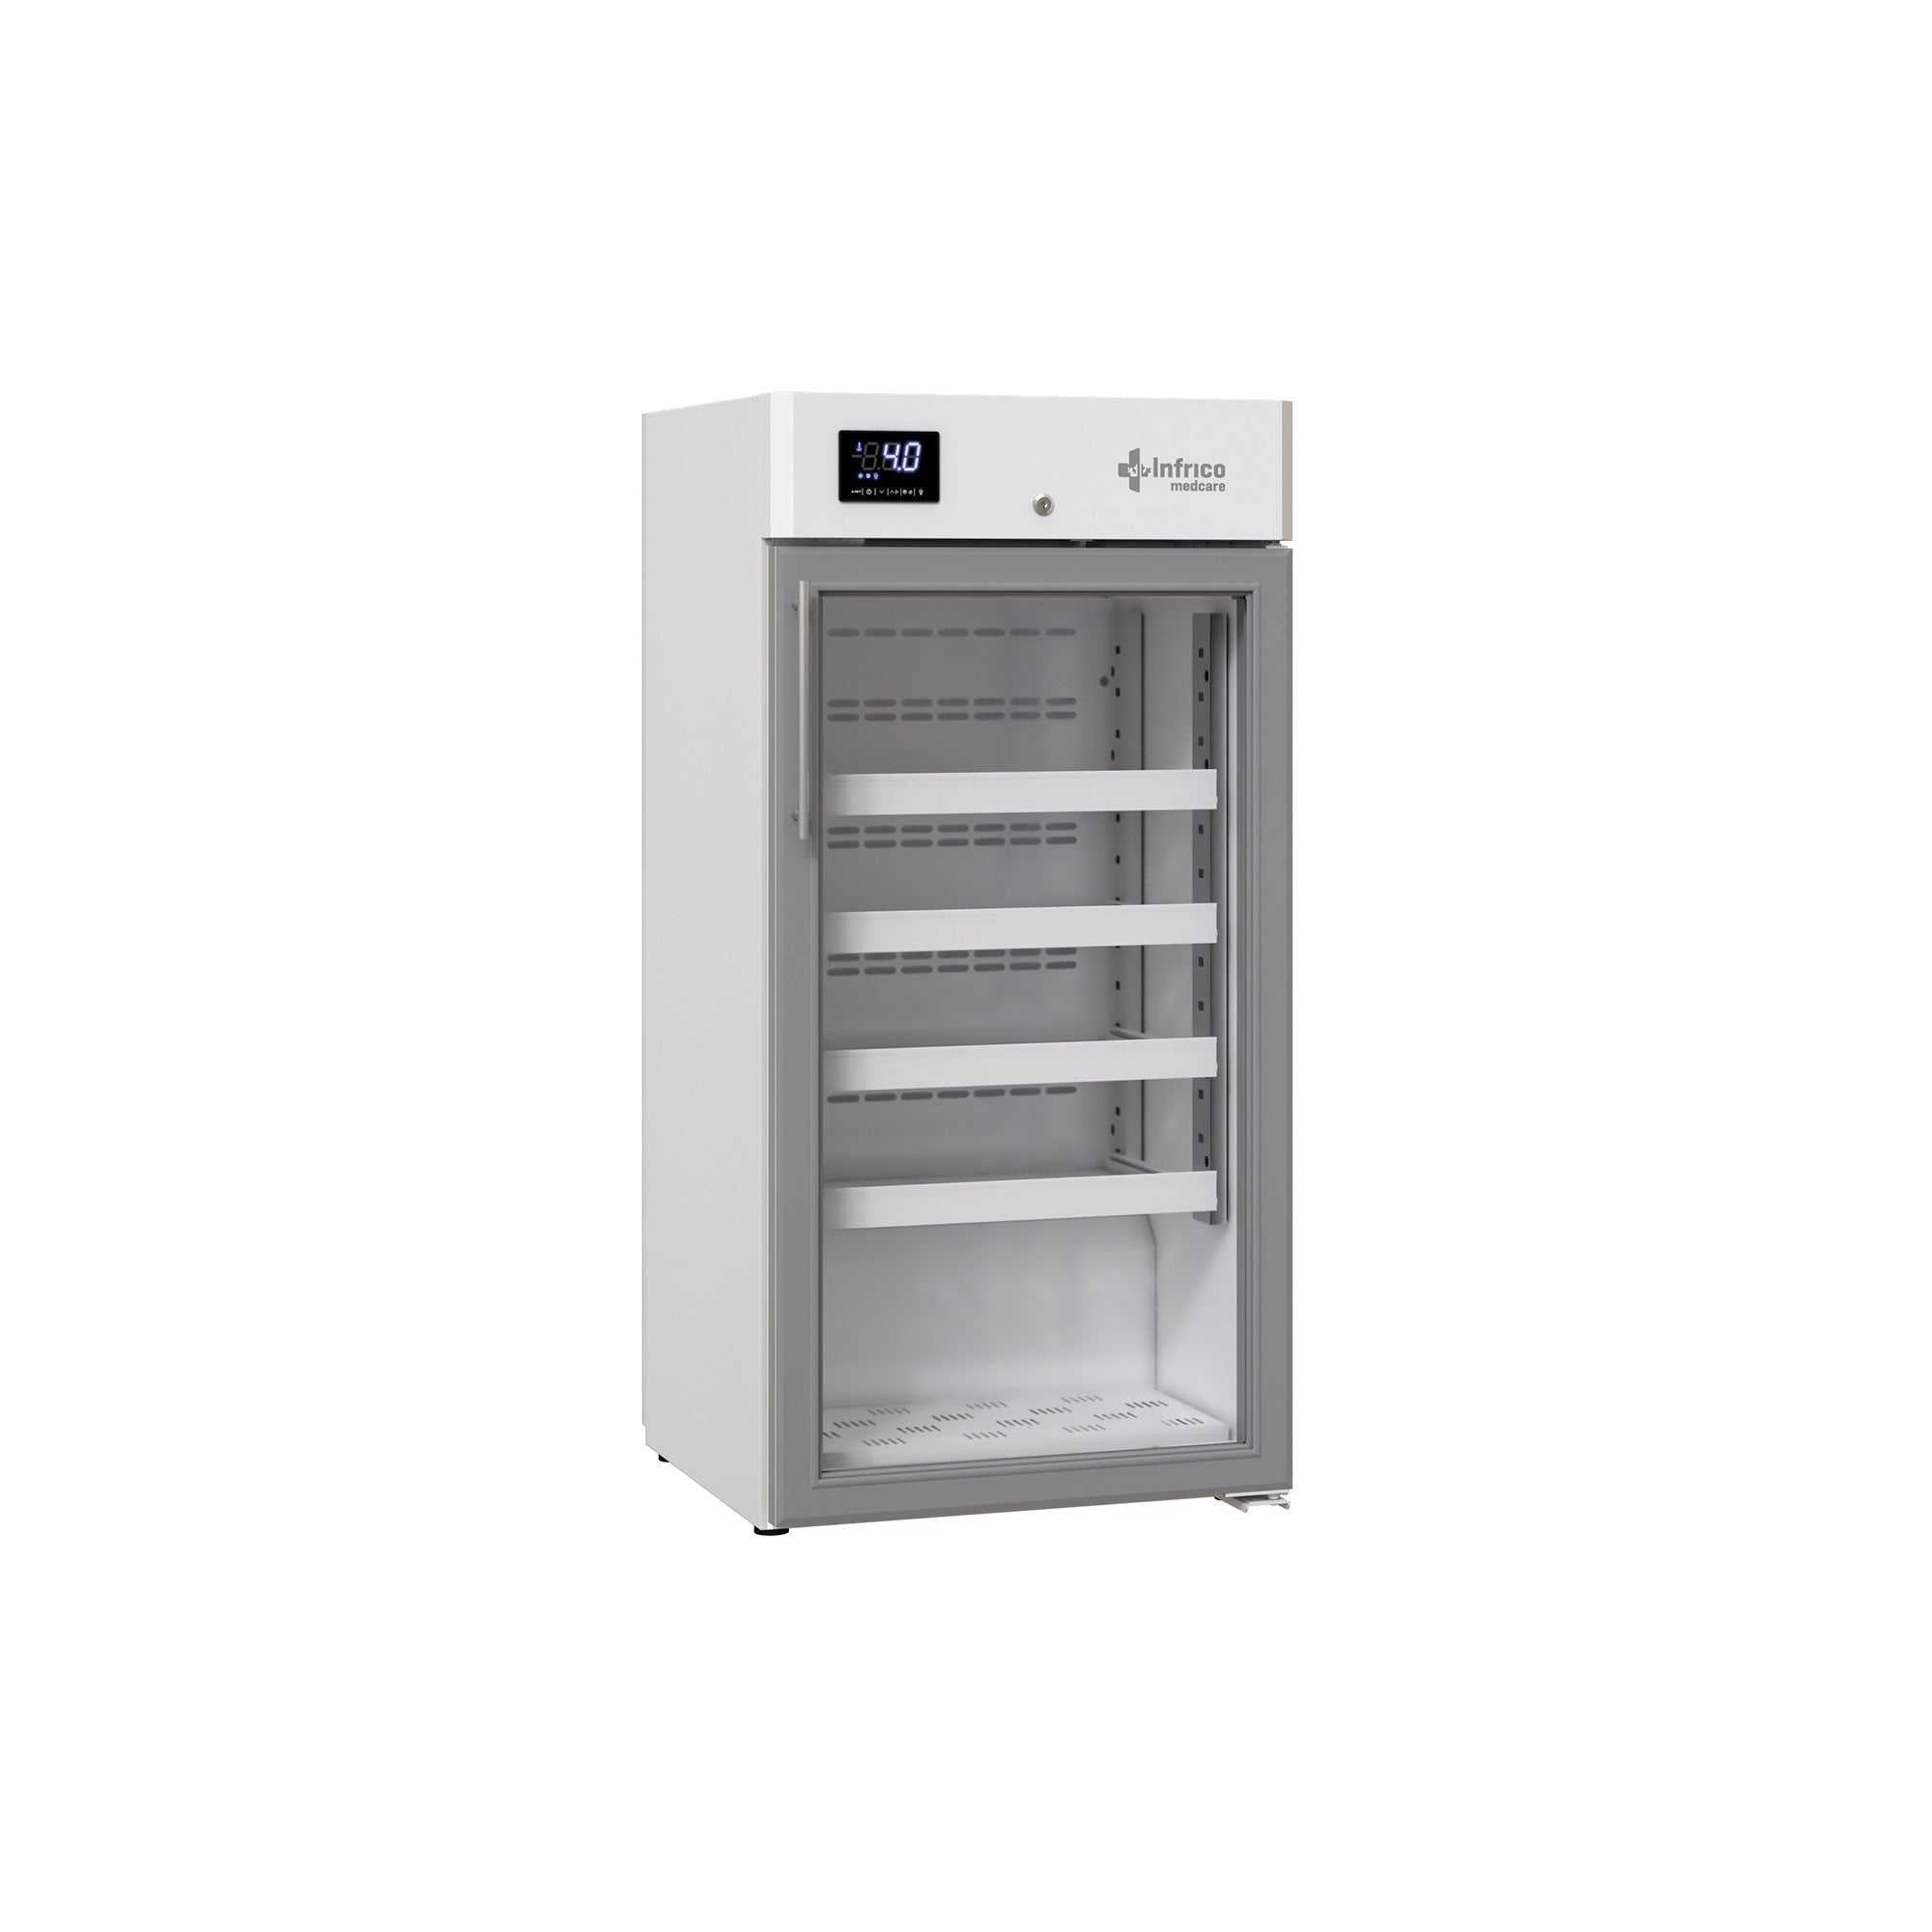 Infrico refrigeration